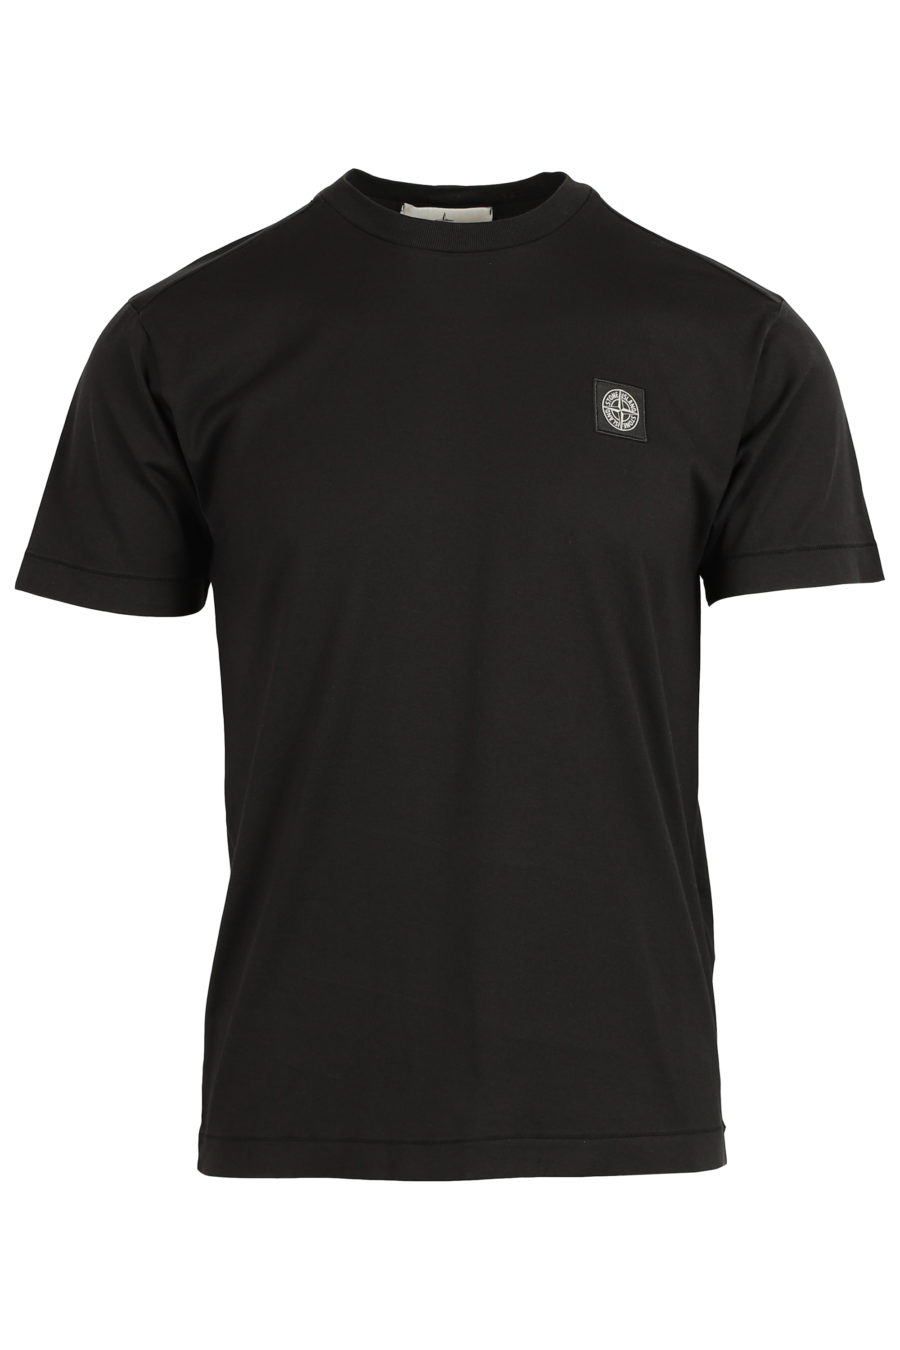 Camiseta negra con parche - IMG 3595